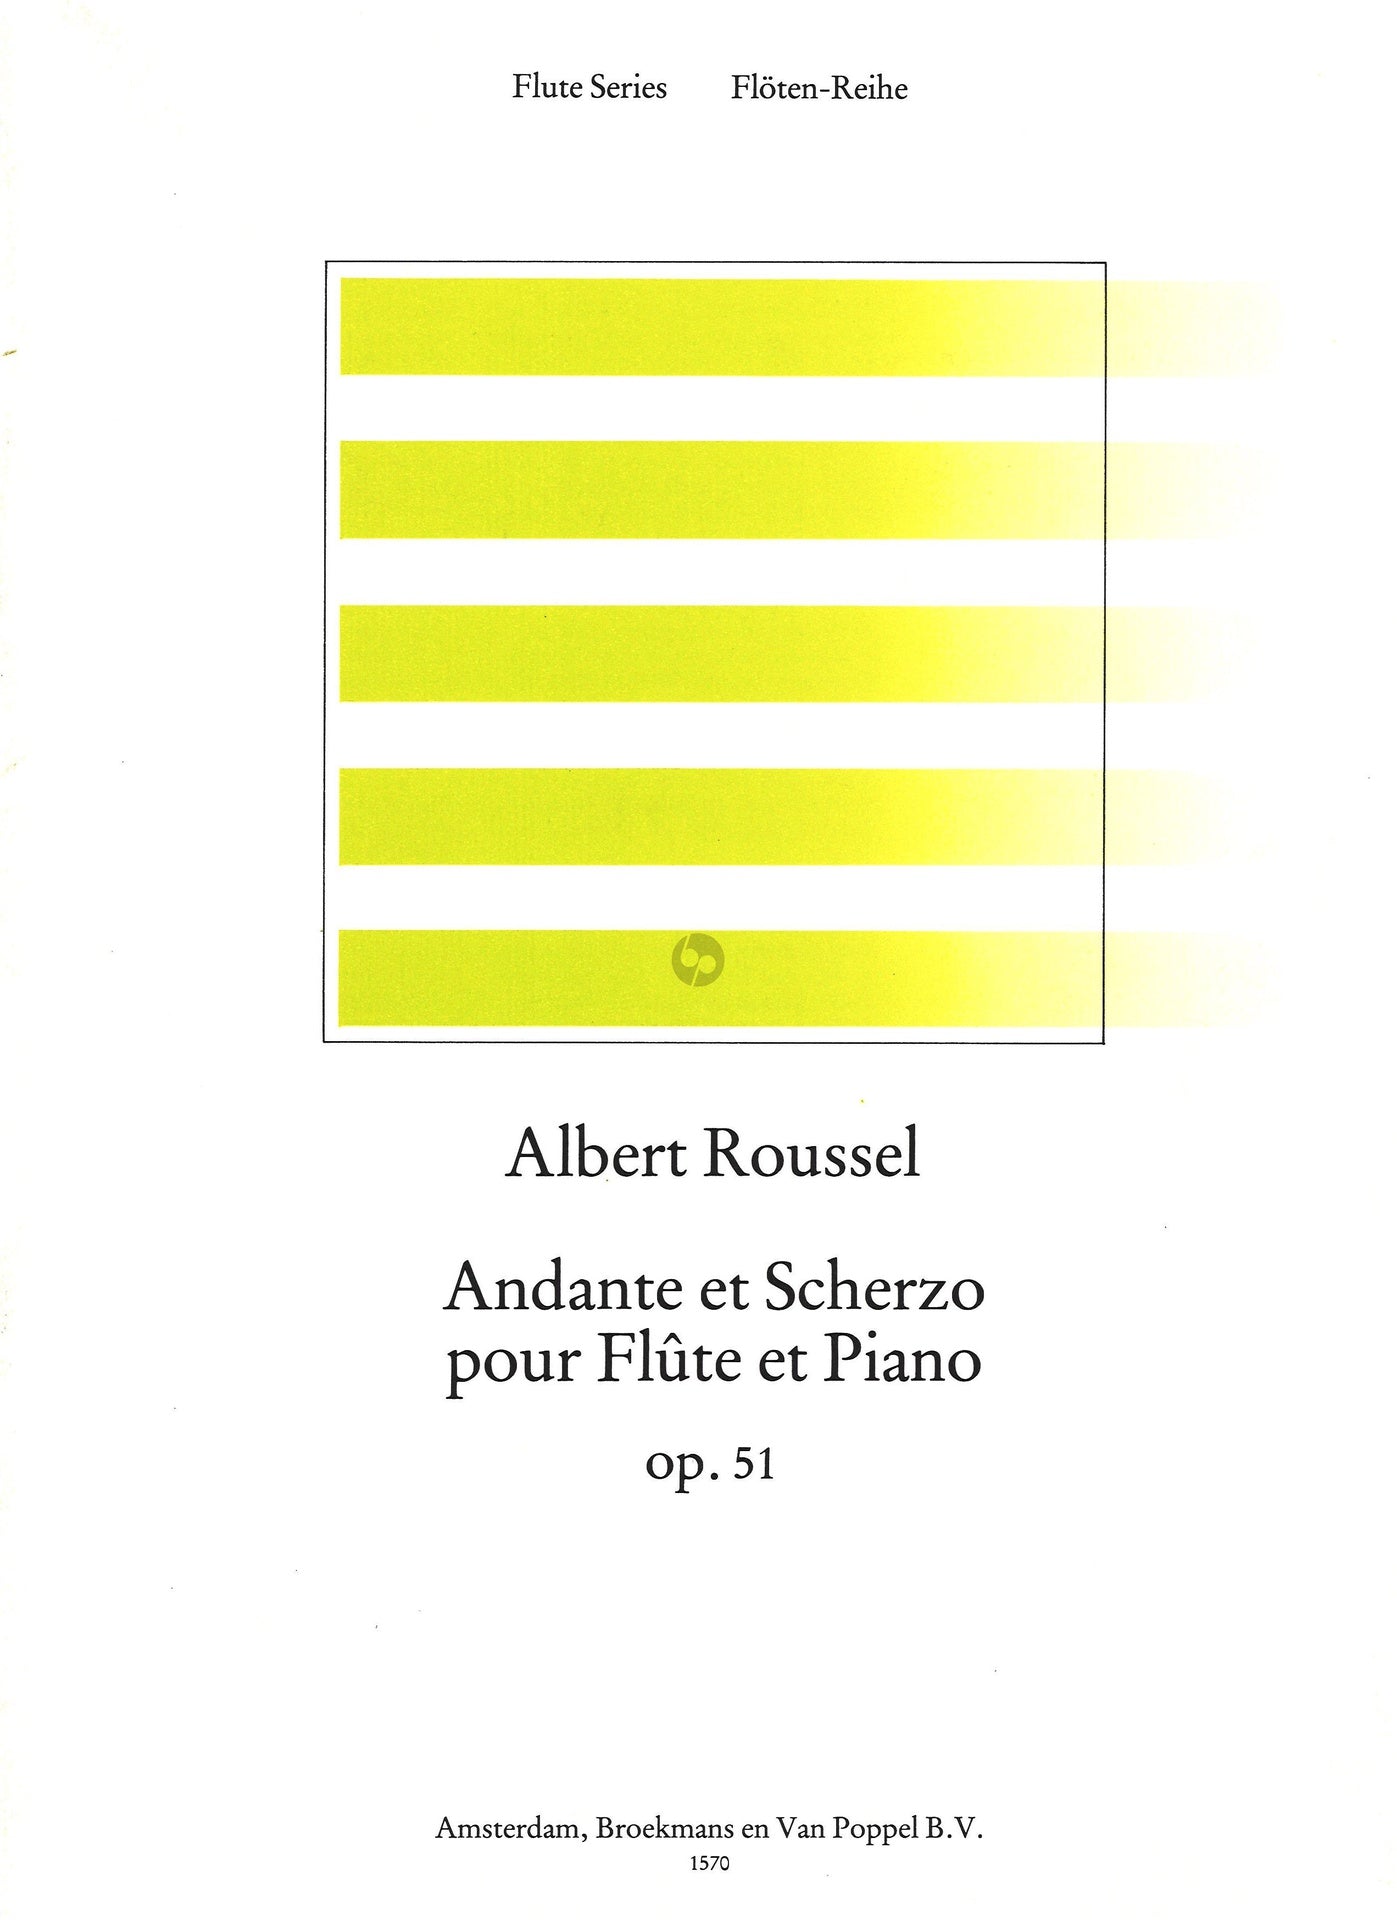 Roussel - Andante and Scherzo Op51 - Flute/Piano Accompaniment Broekmans BVP1570